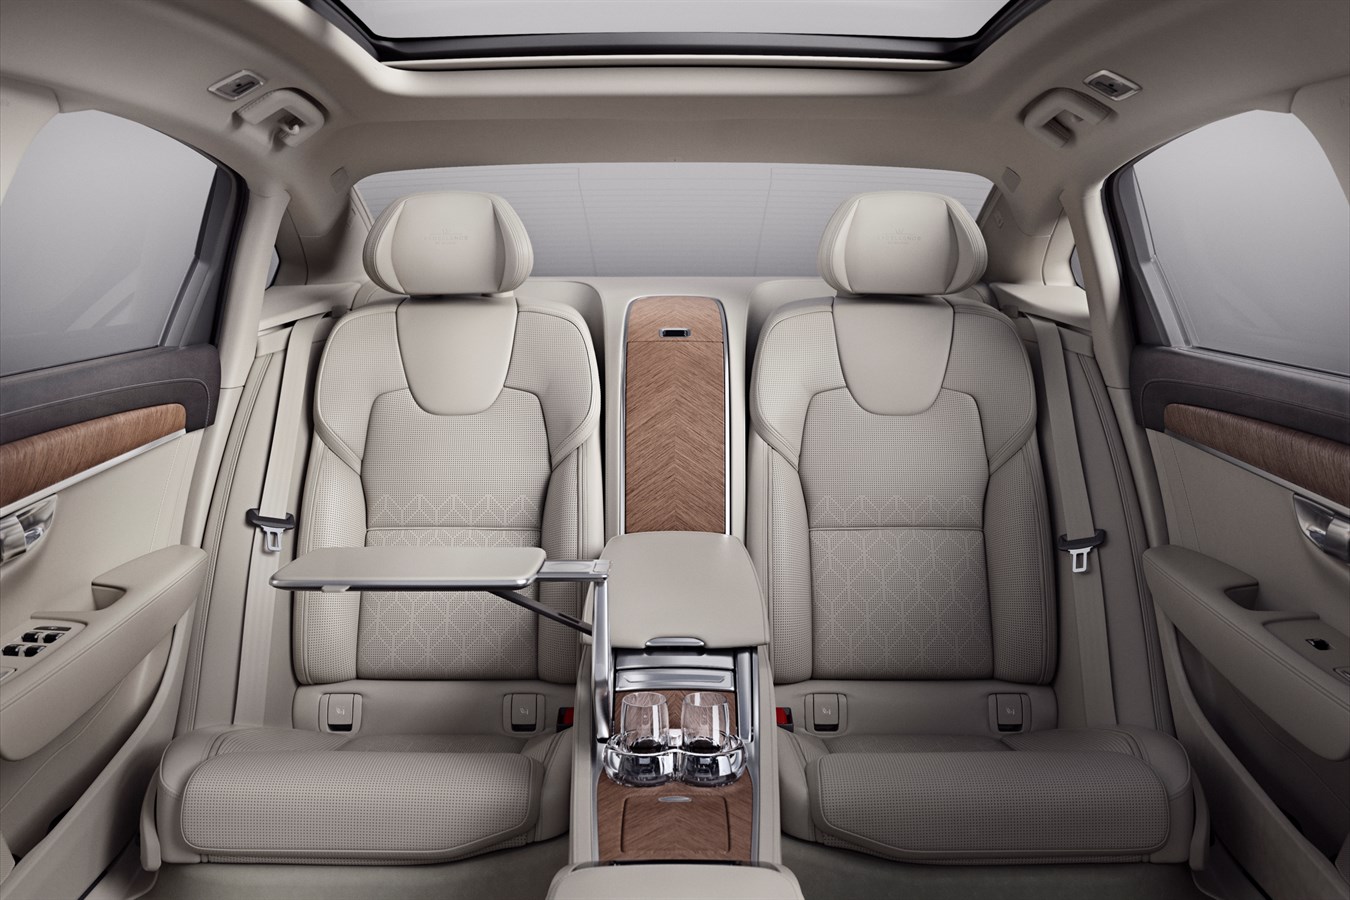 Volvo S90 Excellence interior rear